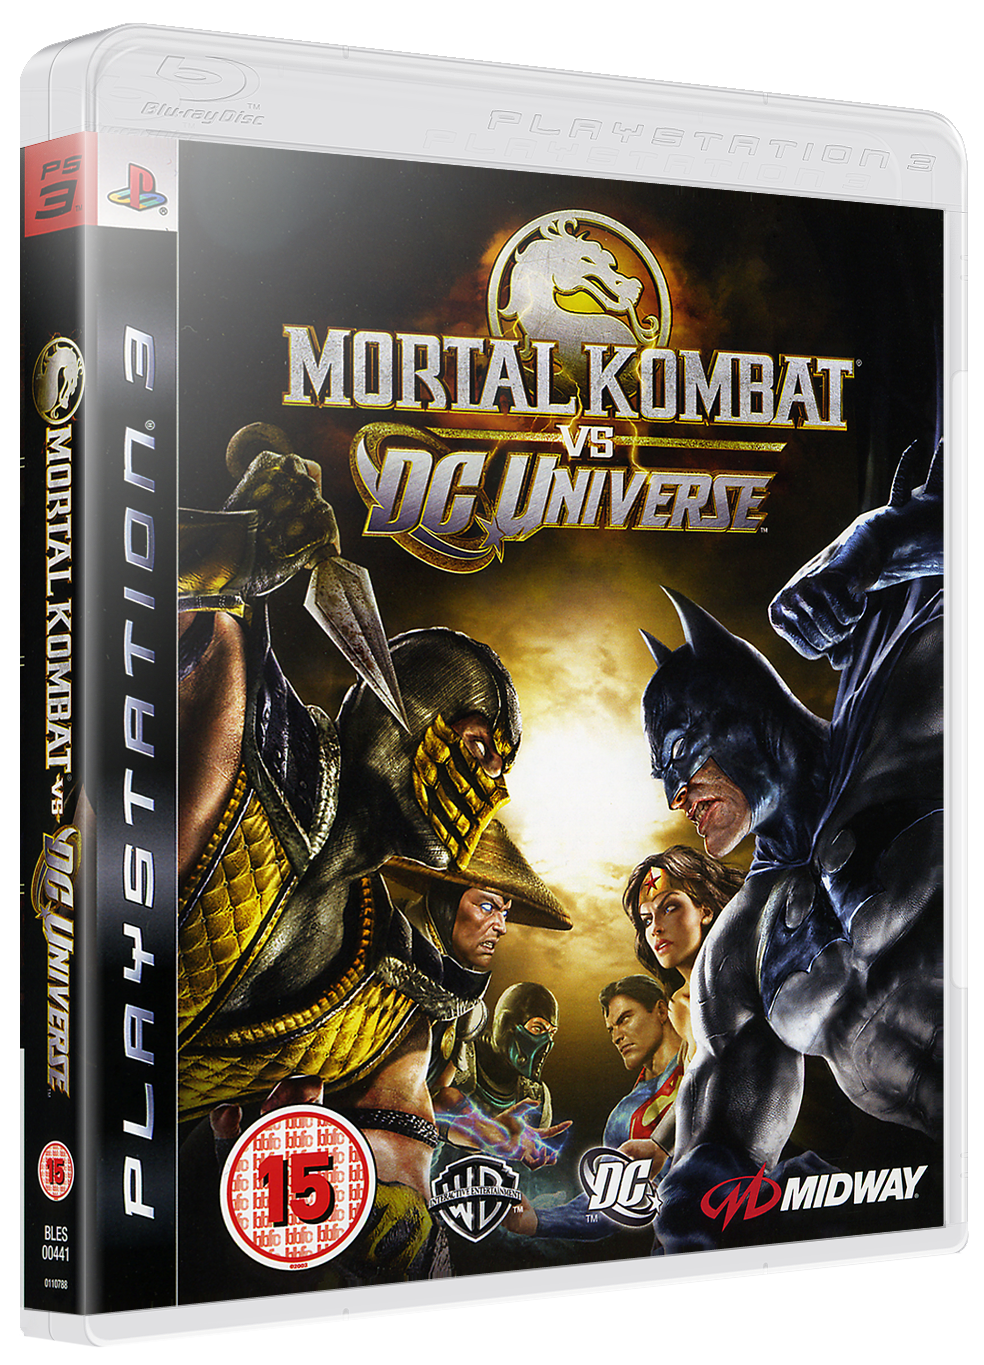 Jogo Mortal Kombat vs. DC Universe - PS3 - Brasil Games - Console